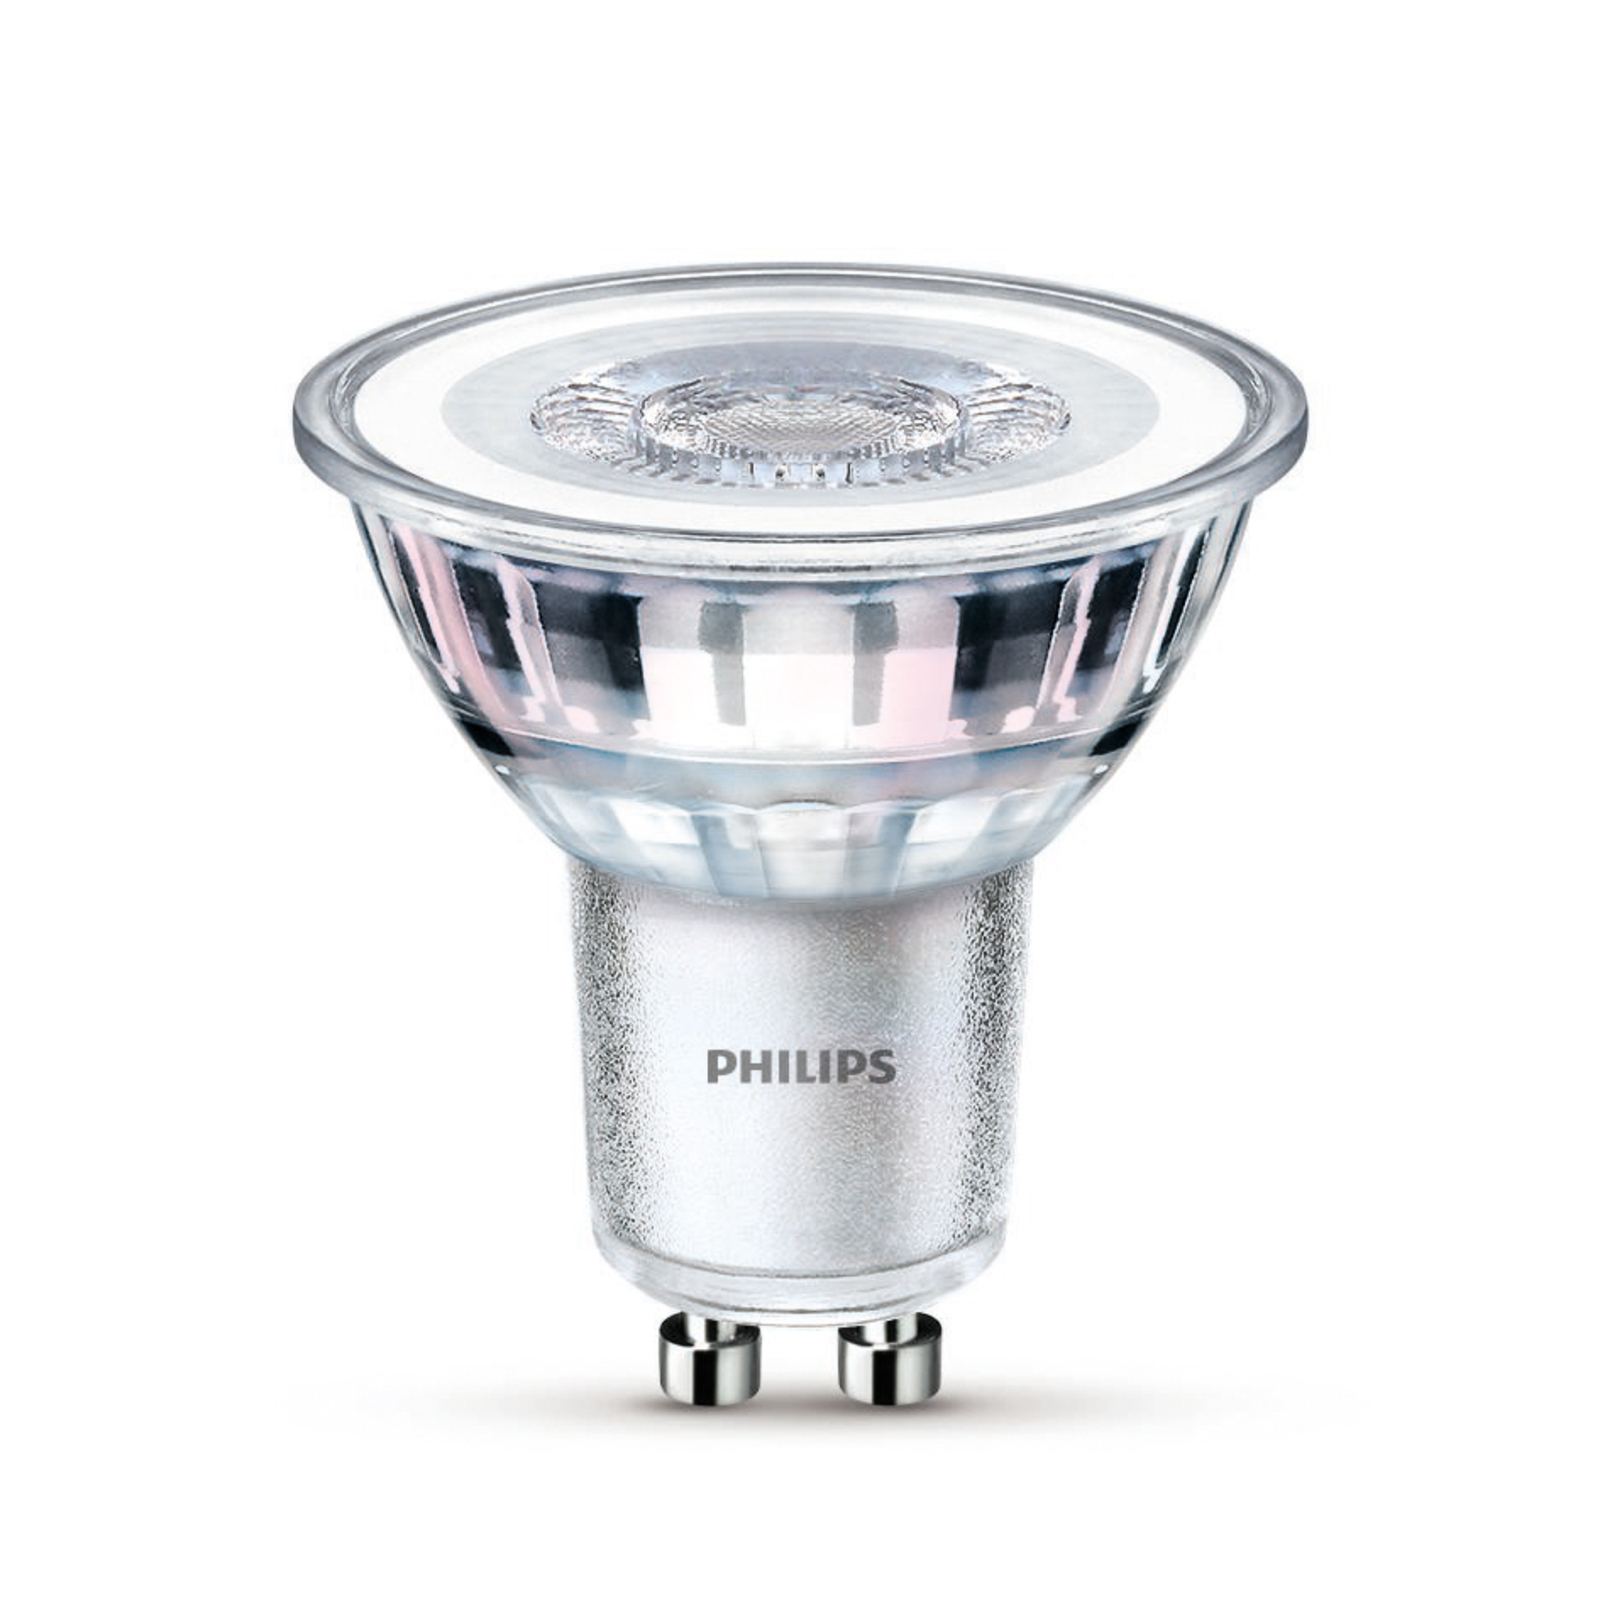 Philips LED žárovka GU10 3,5W 275lm 840 čirá 36° 6